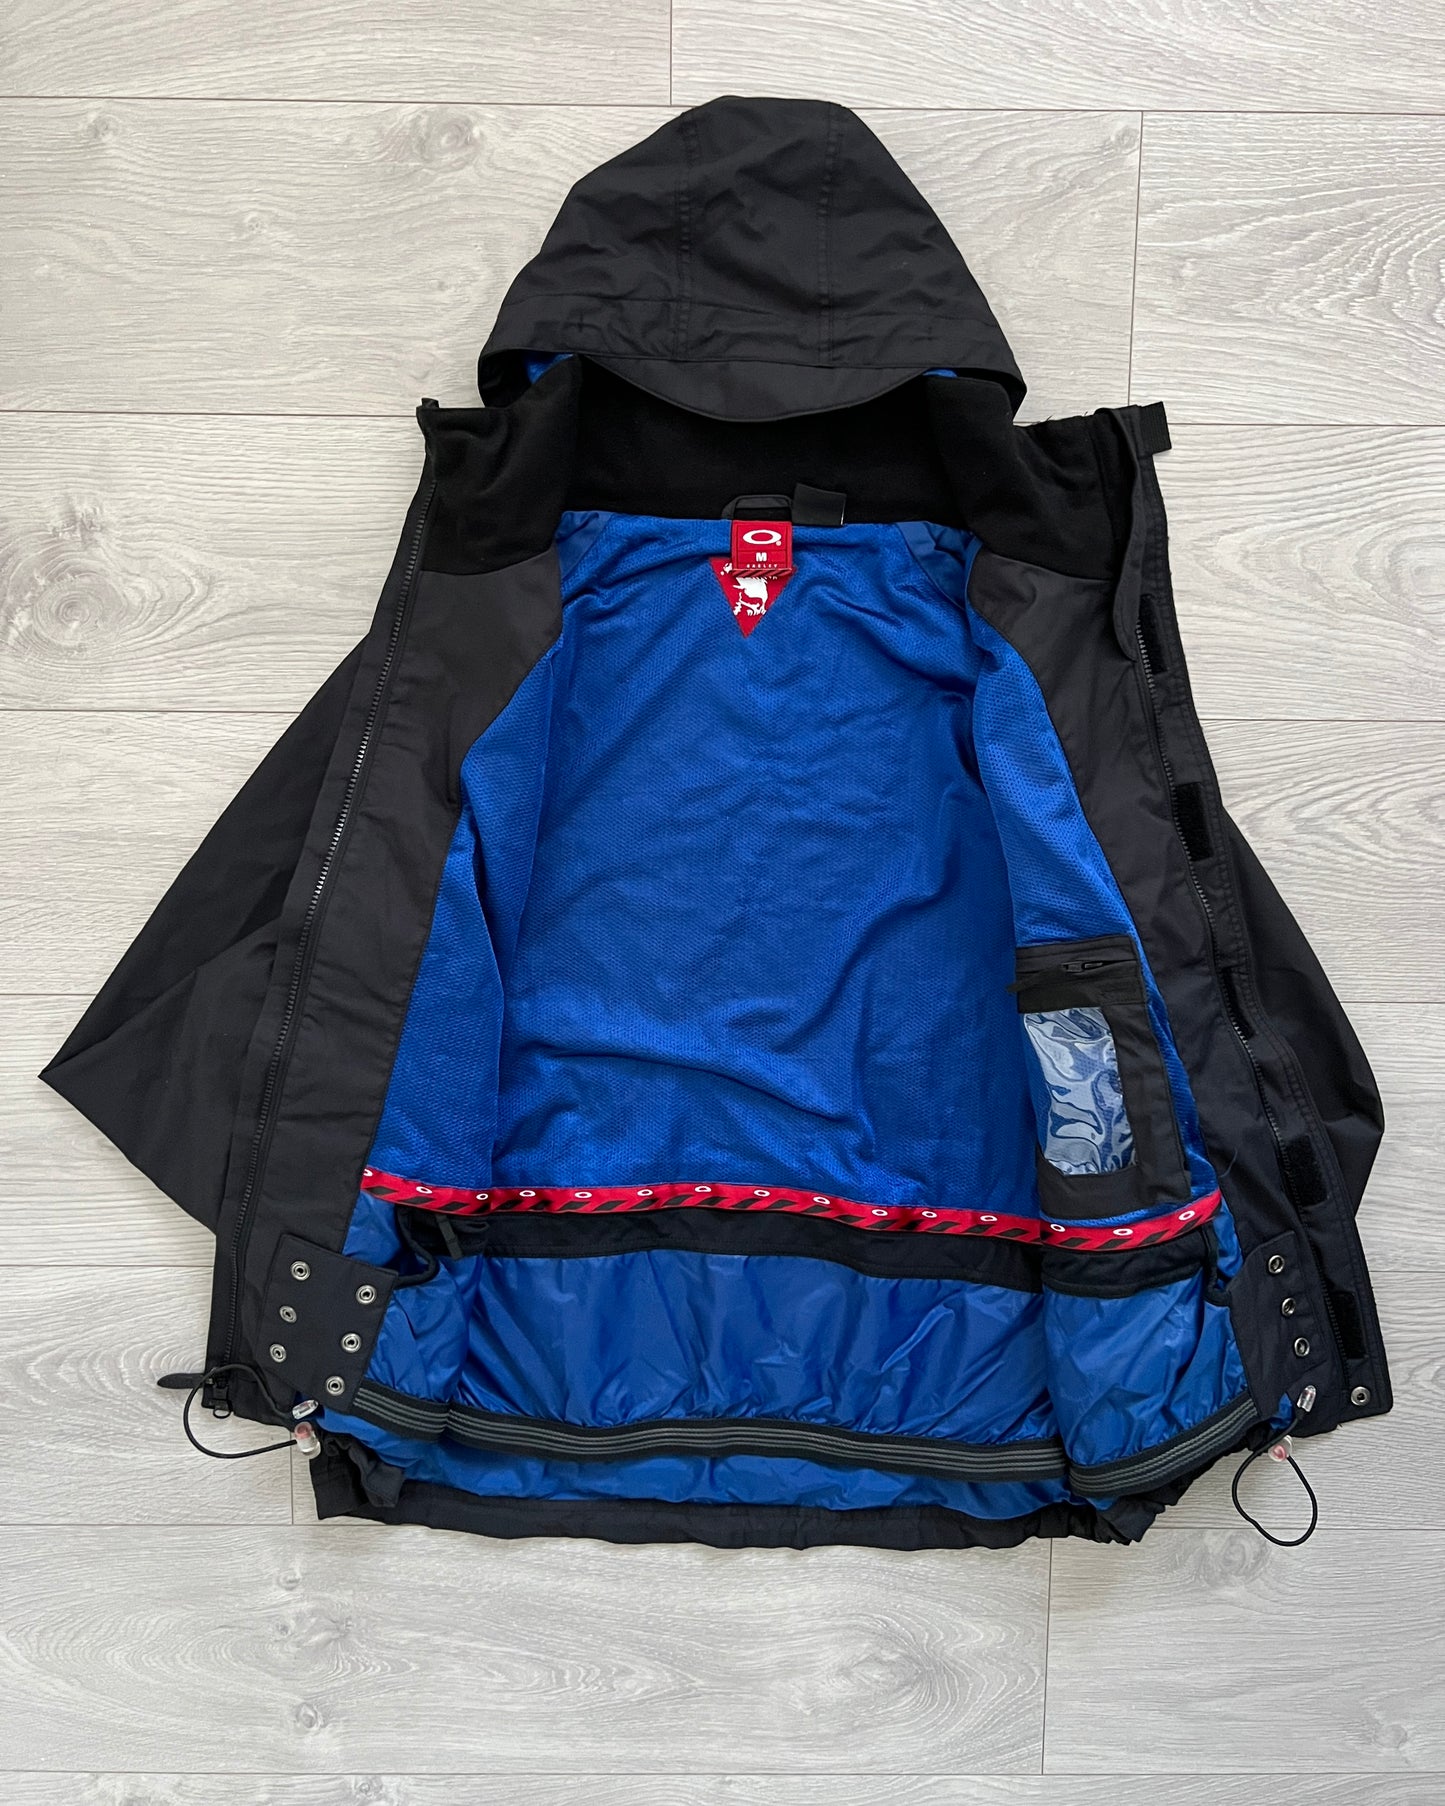 Oakley 00s Technical Ski Jacket - Size M